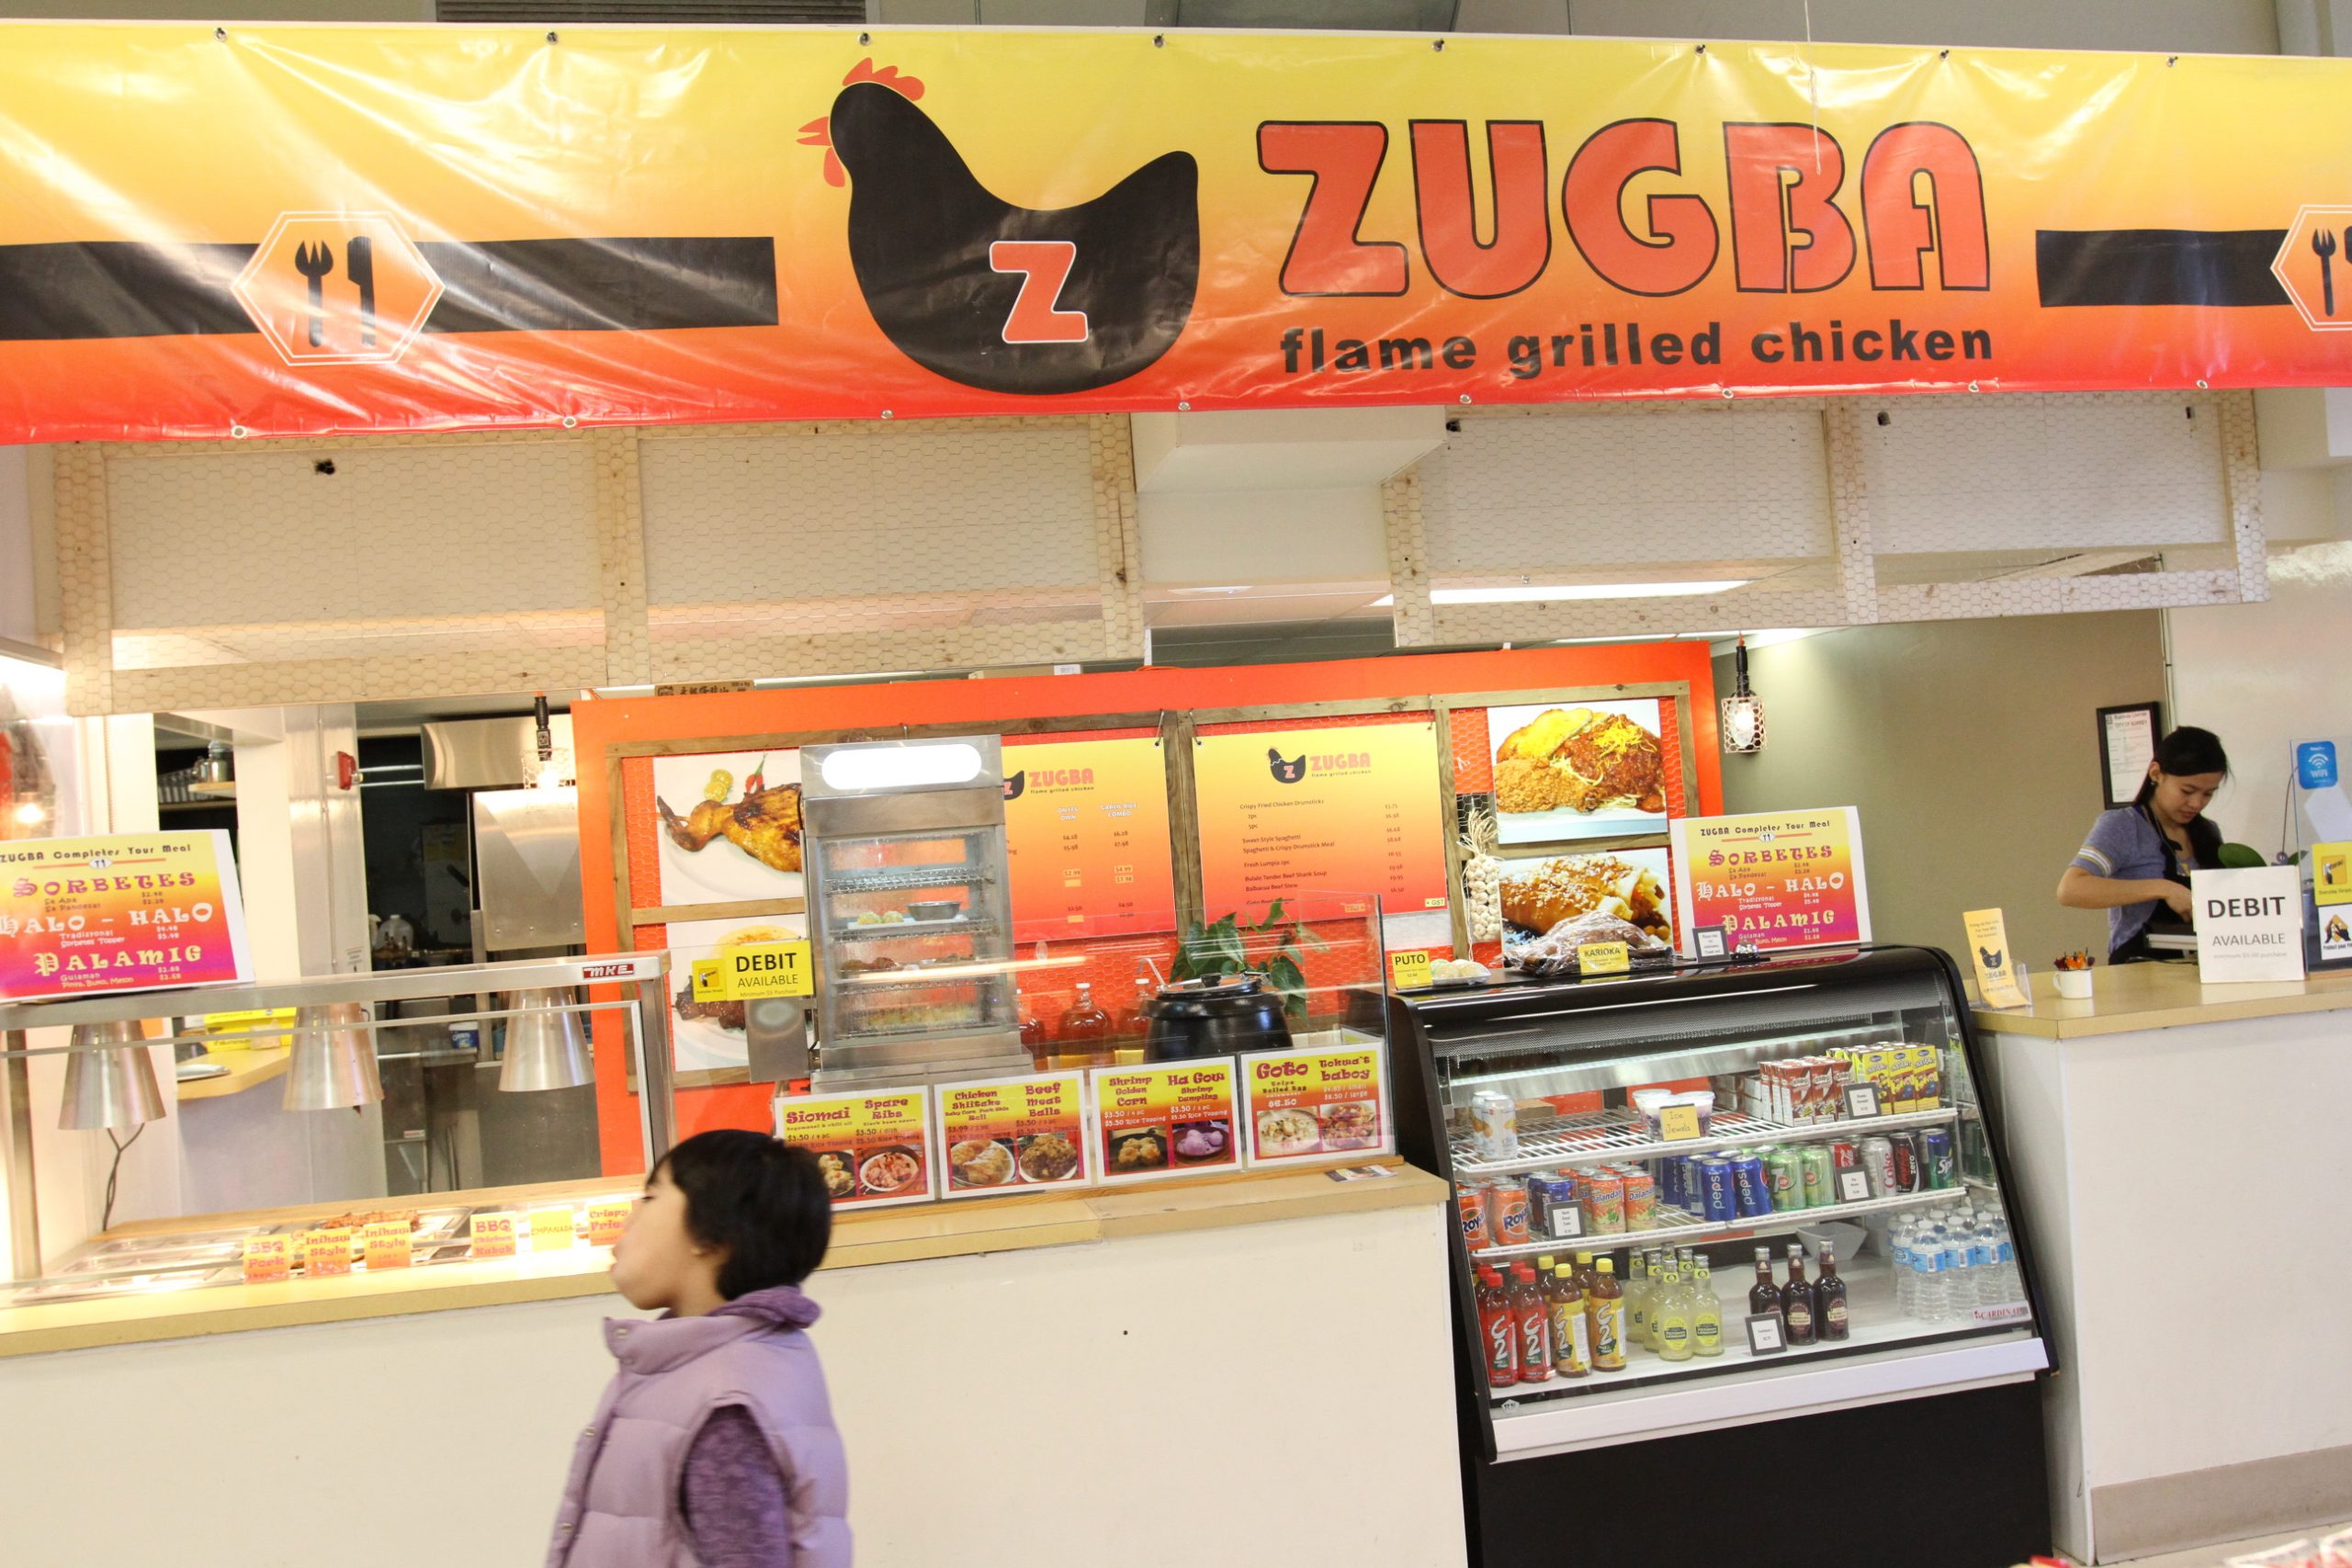 Zugba Flame-Grilled Chicken photos